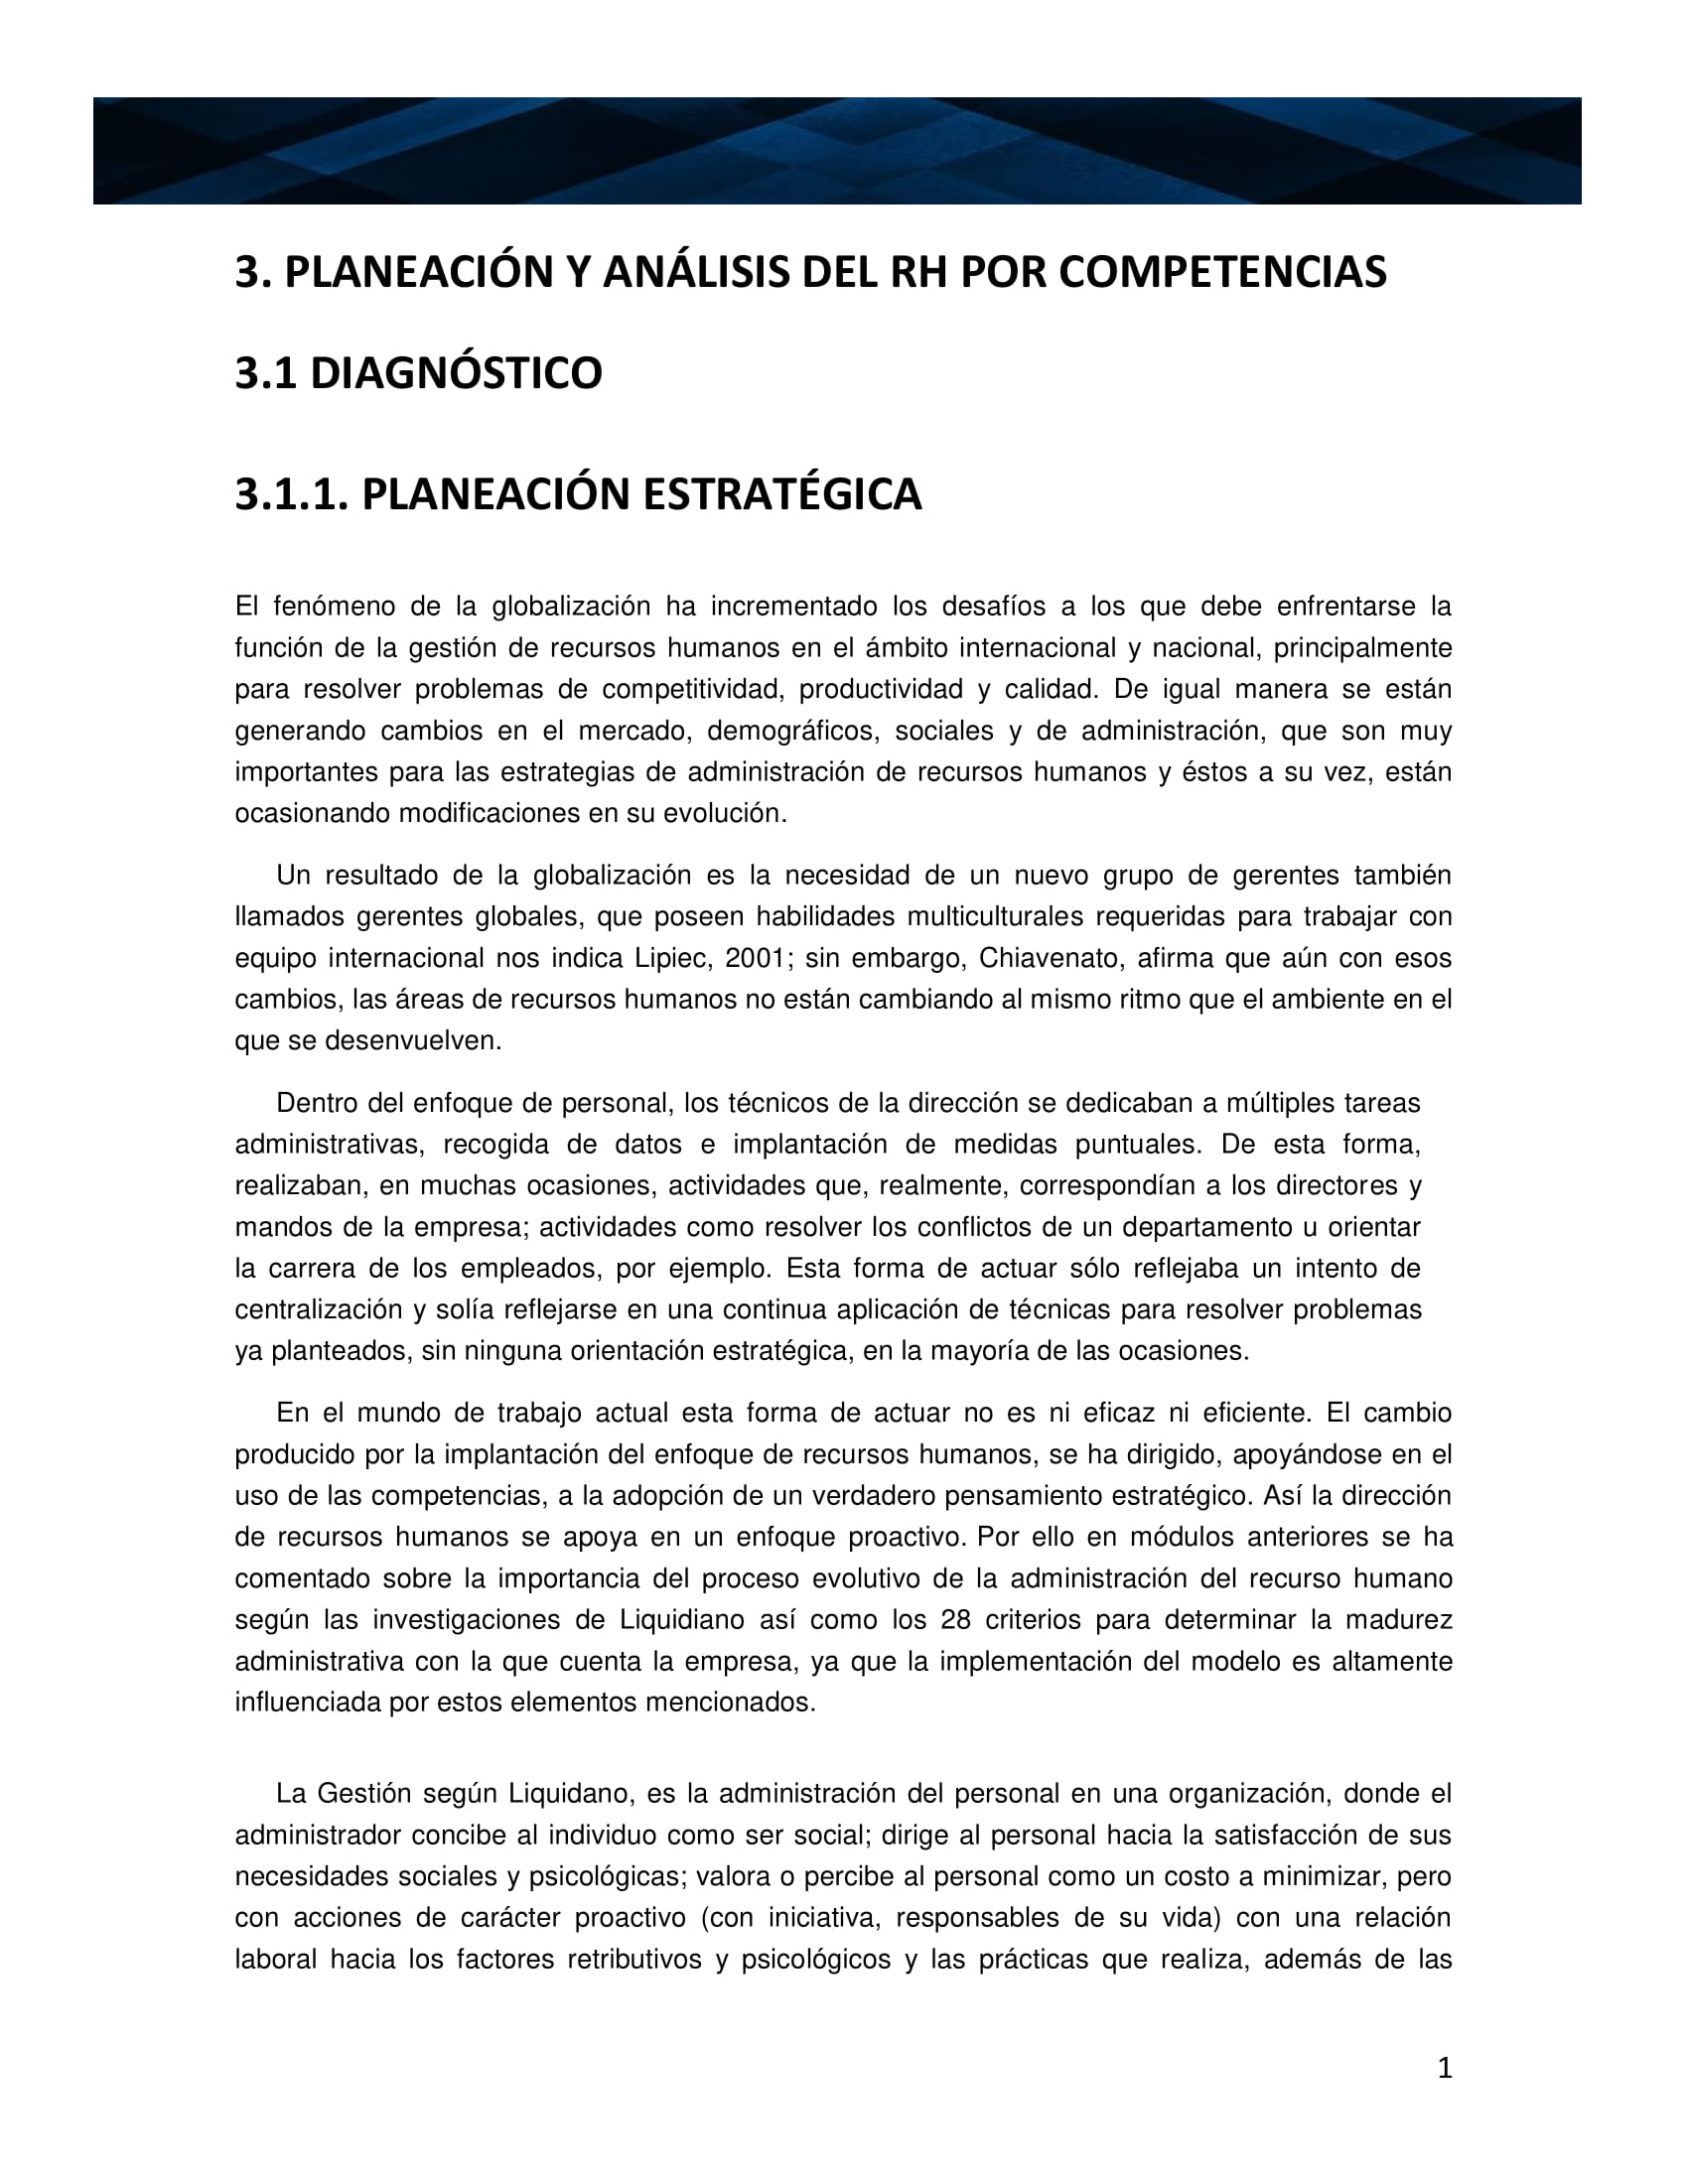 Manual_Mod3_Planeacion_RH_Competencias-02